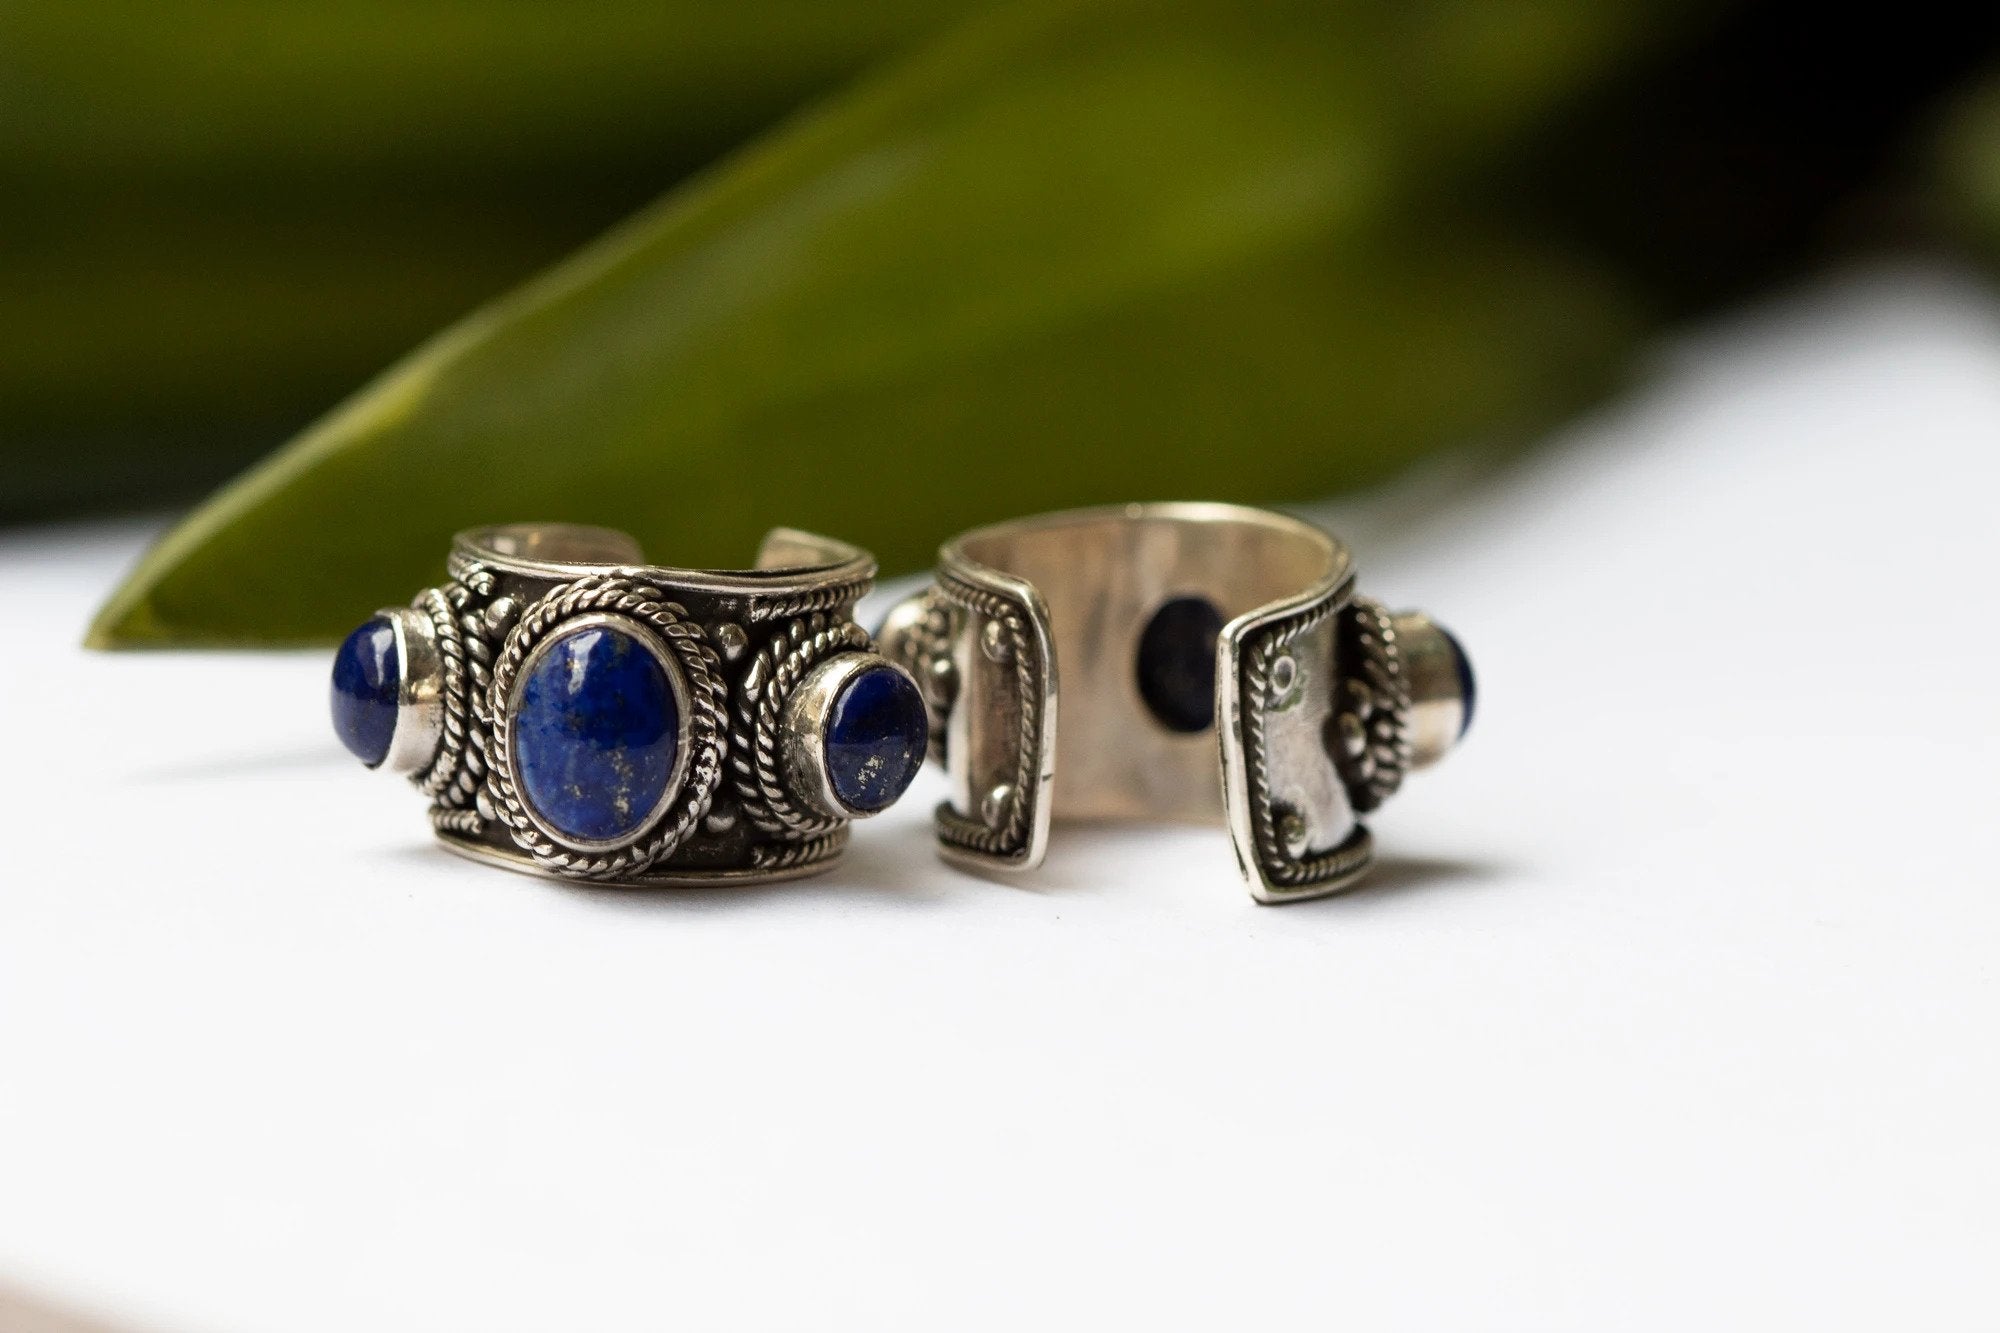 An Ethereal ornament: Lapis Lazuli Jewelry - Its Ambra